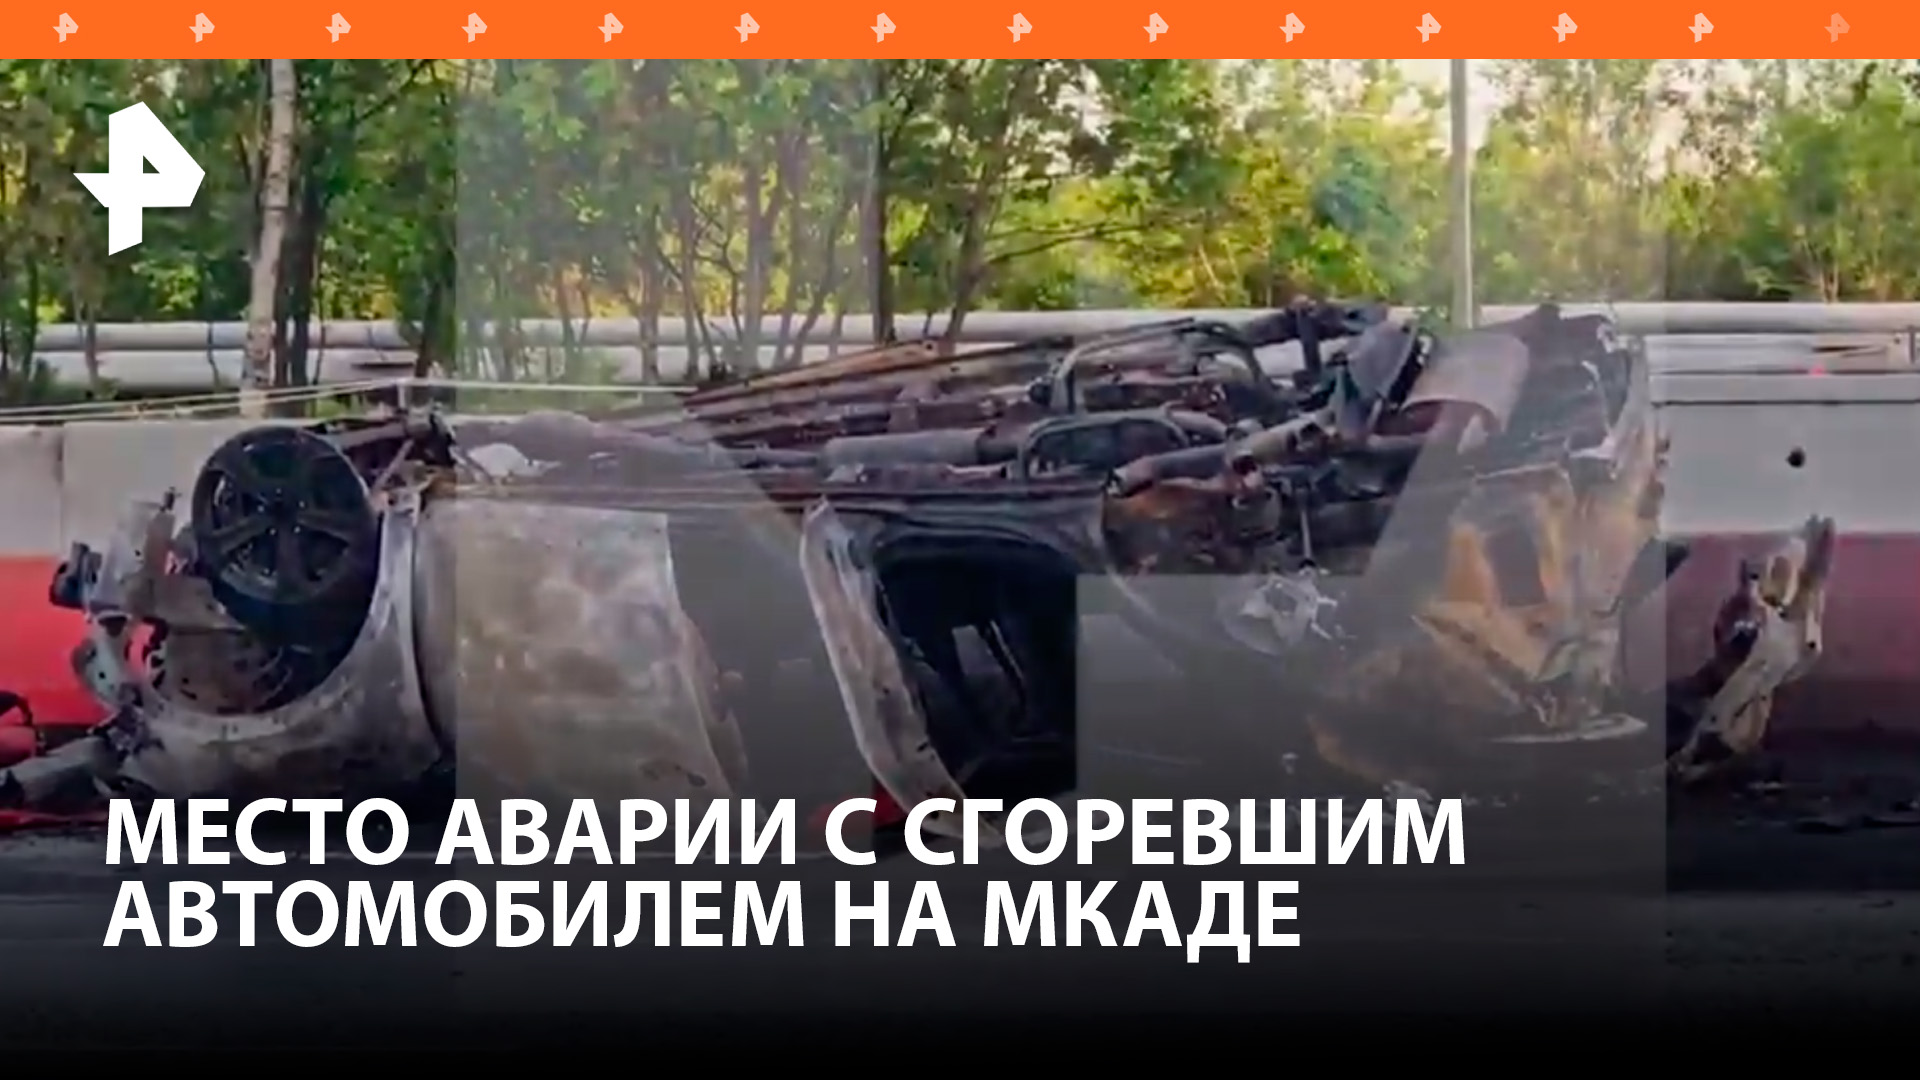 "На обочине дотла сгоревший автомобиль": место аварии на 17-м километре МКАДа / РЕН Новости